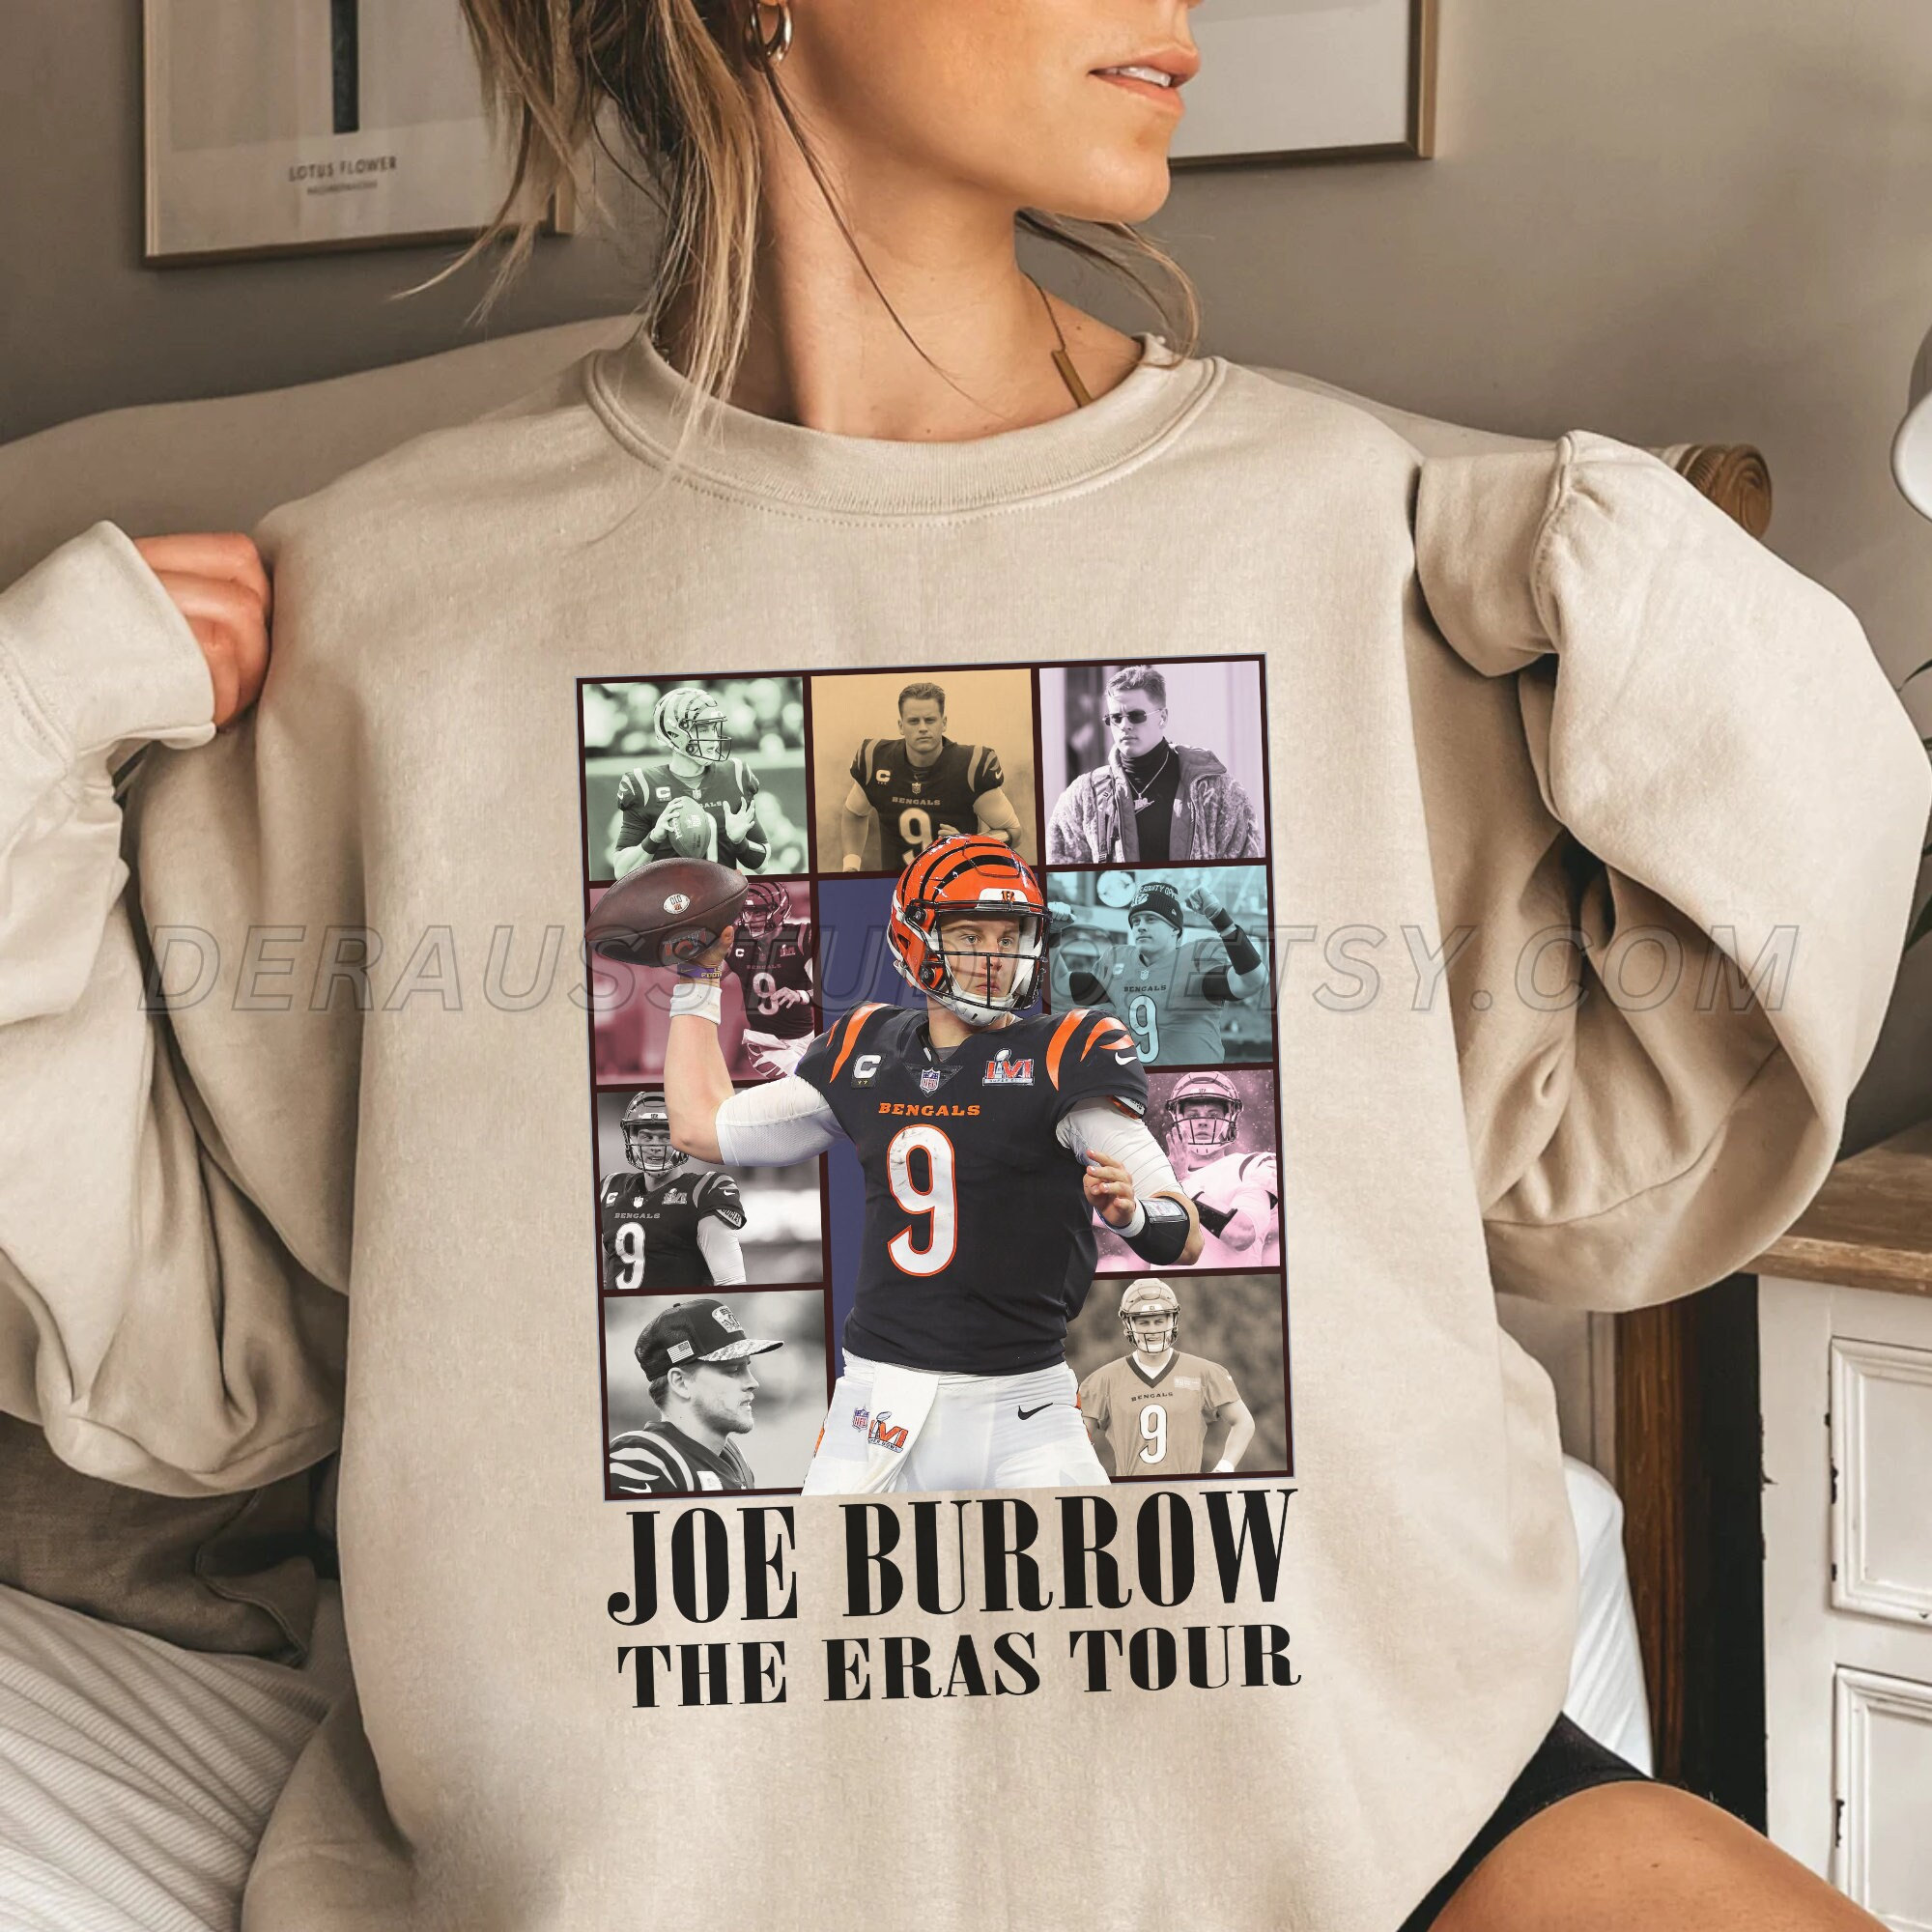 joe burrow womens shirt